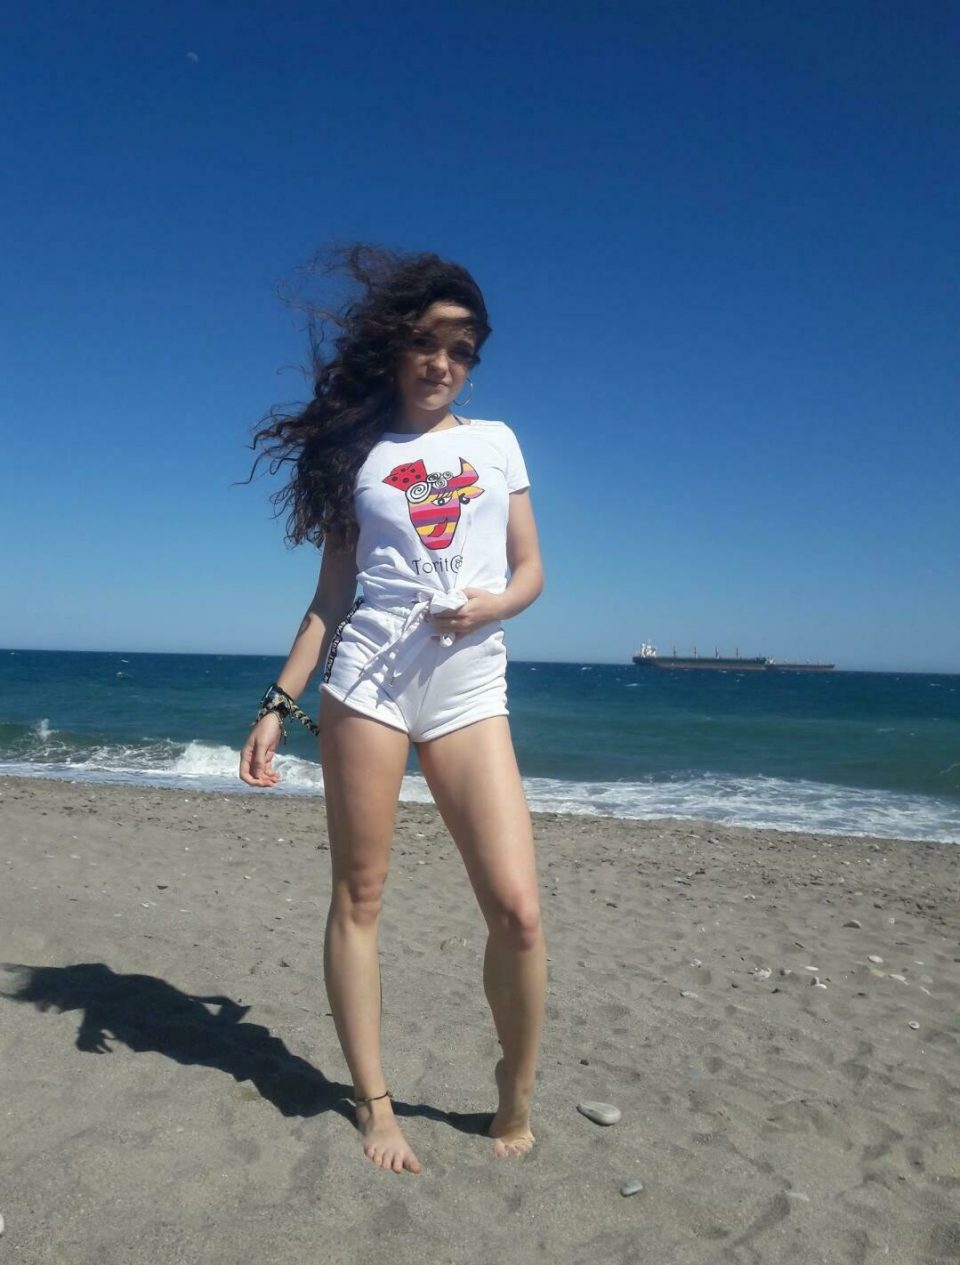 MOdelo en playa con Camiseta Women-Power